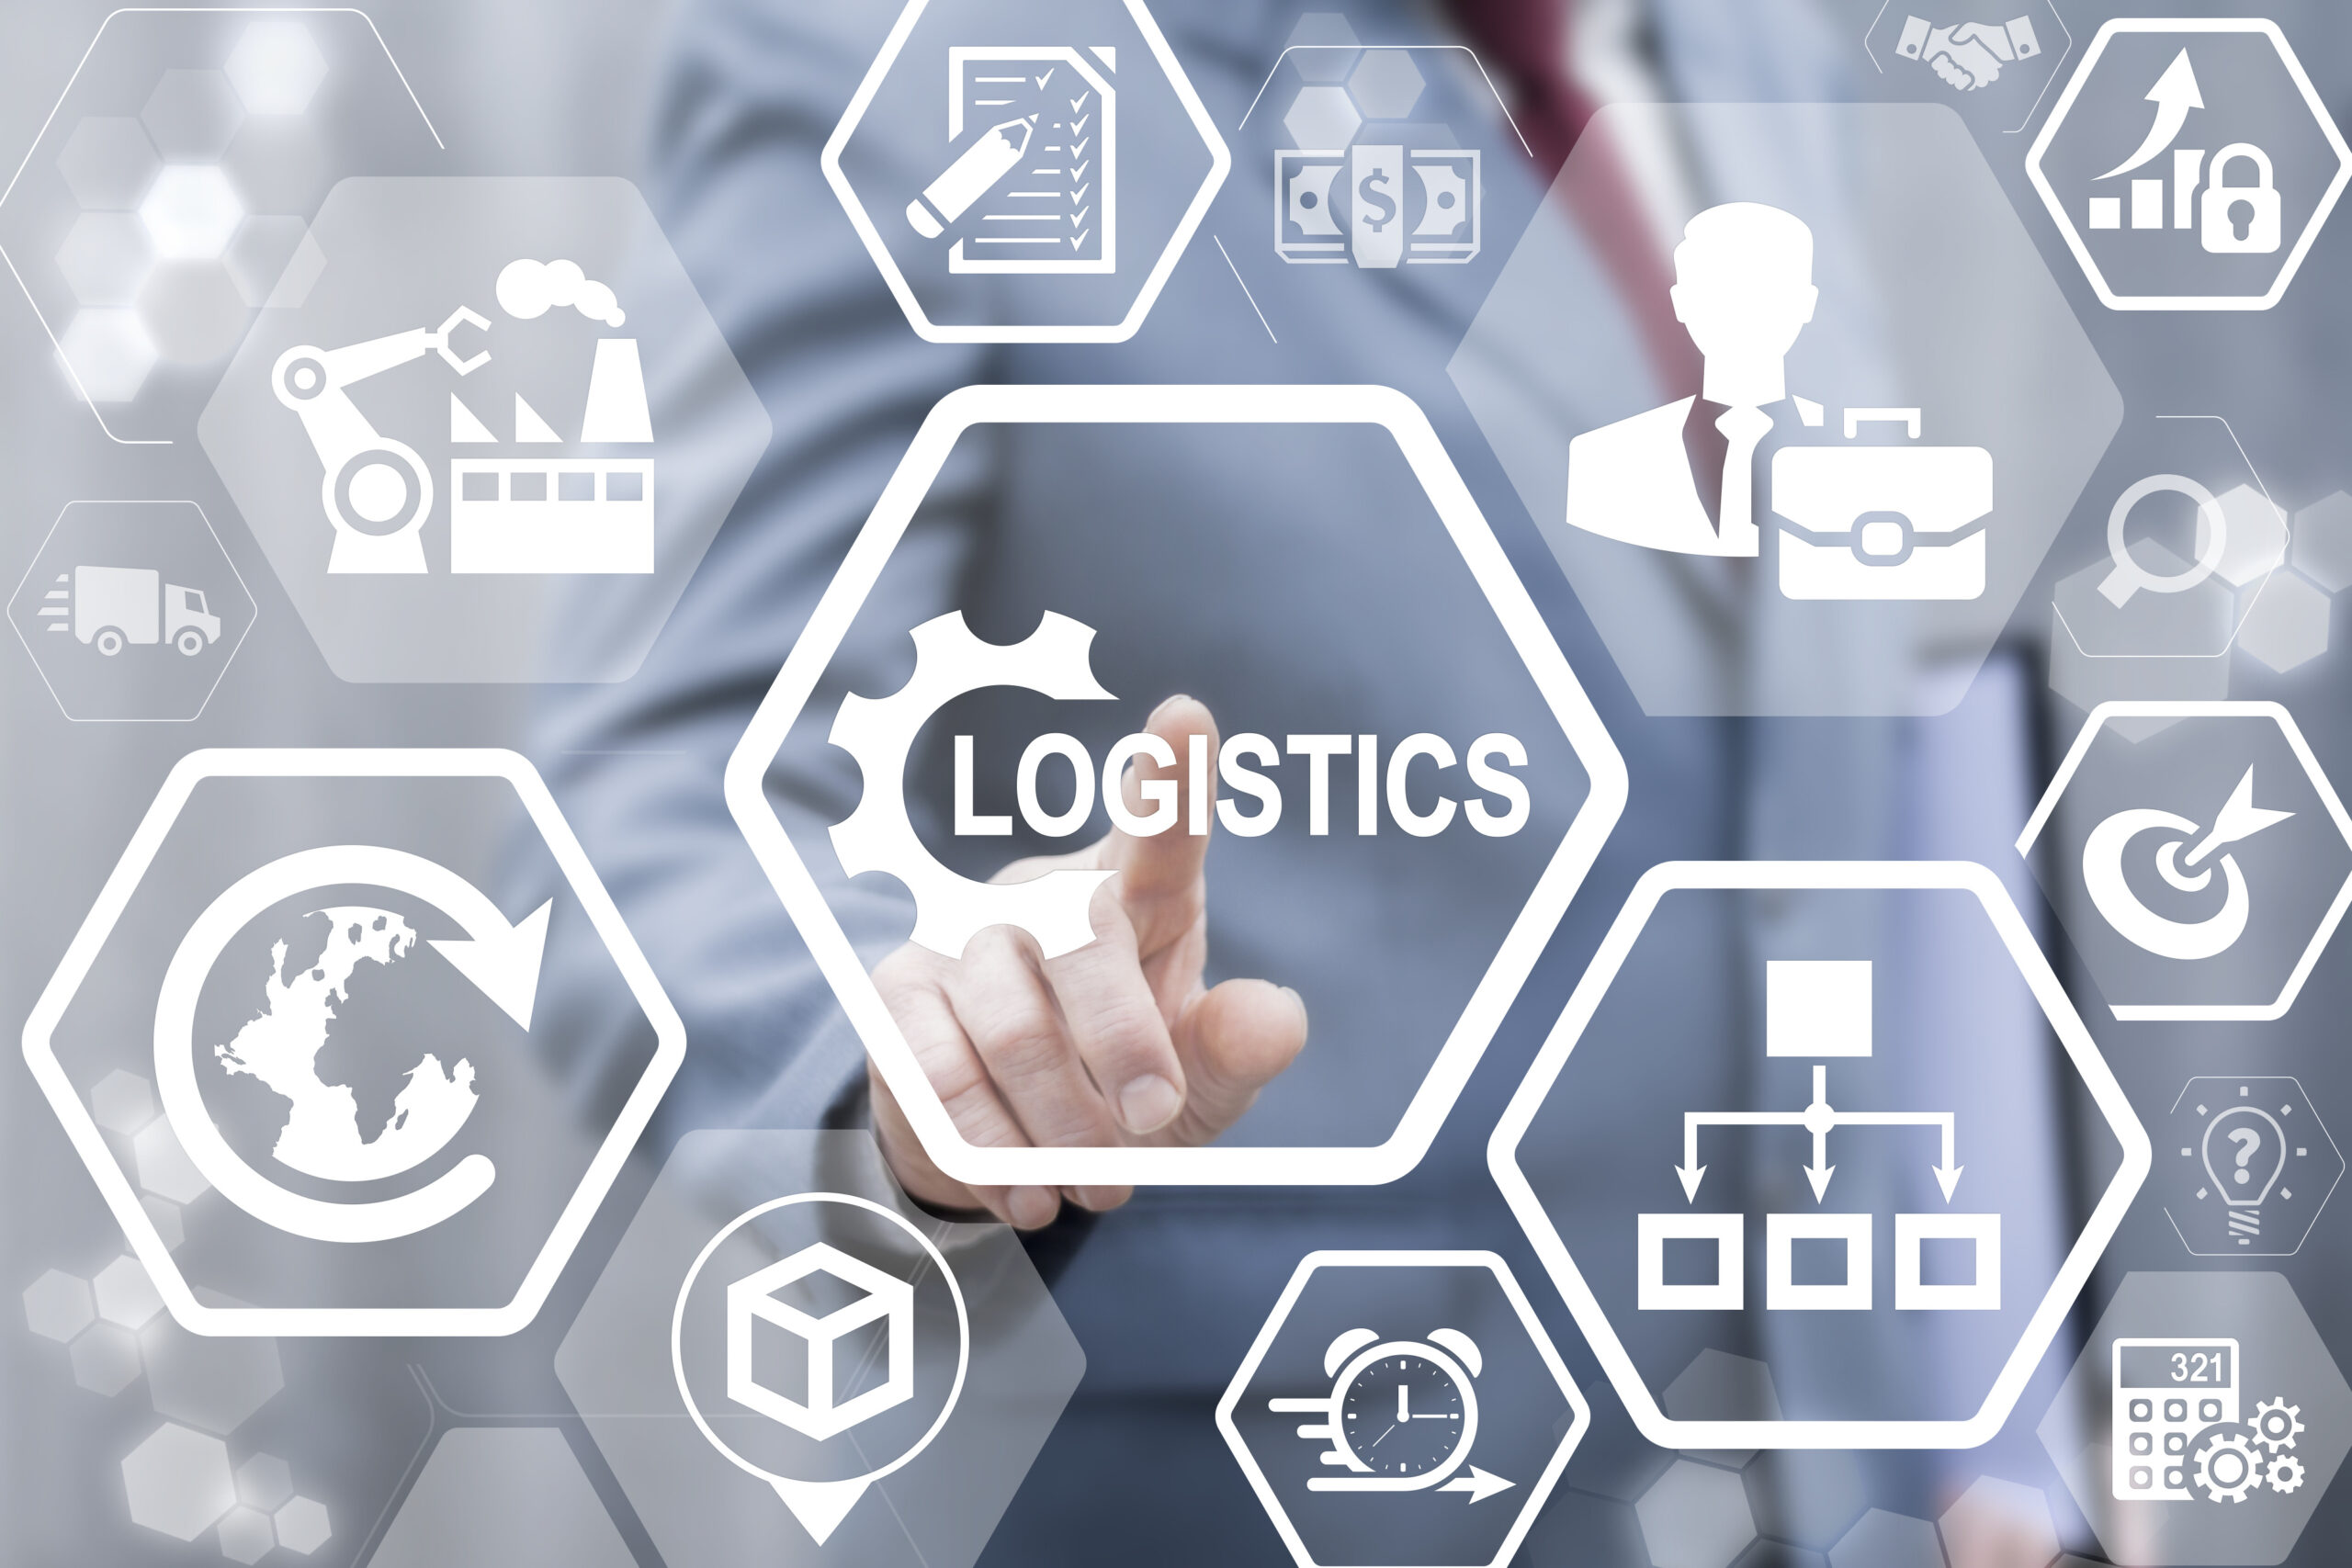 Logistics Management - Dual studies at Schumacher